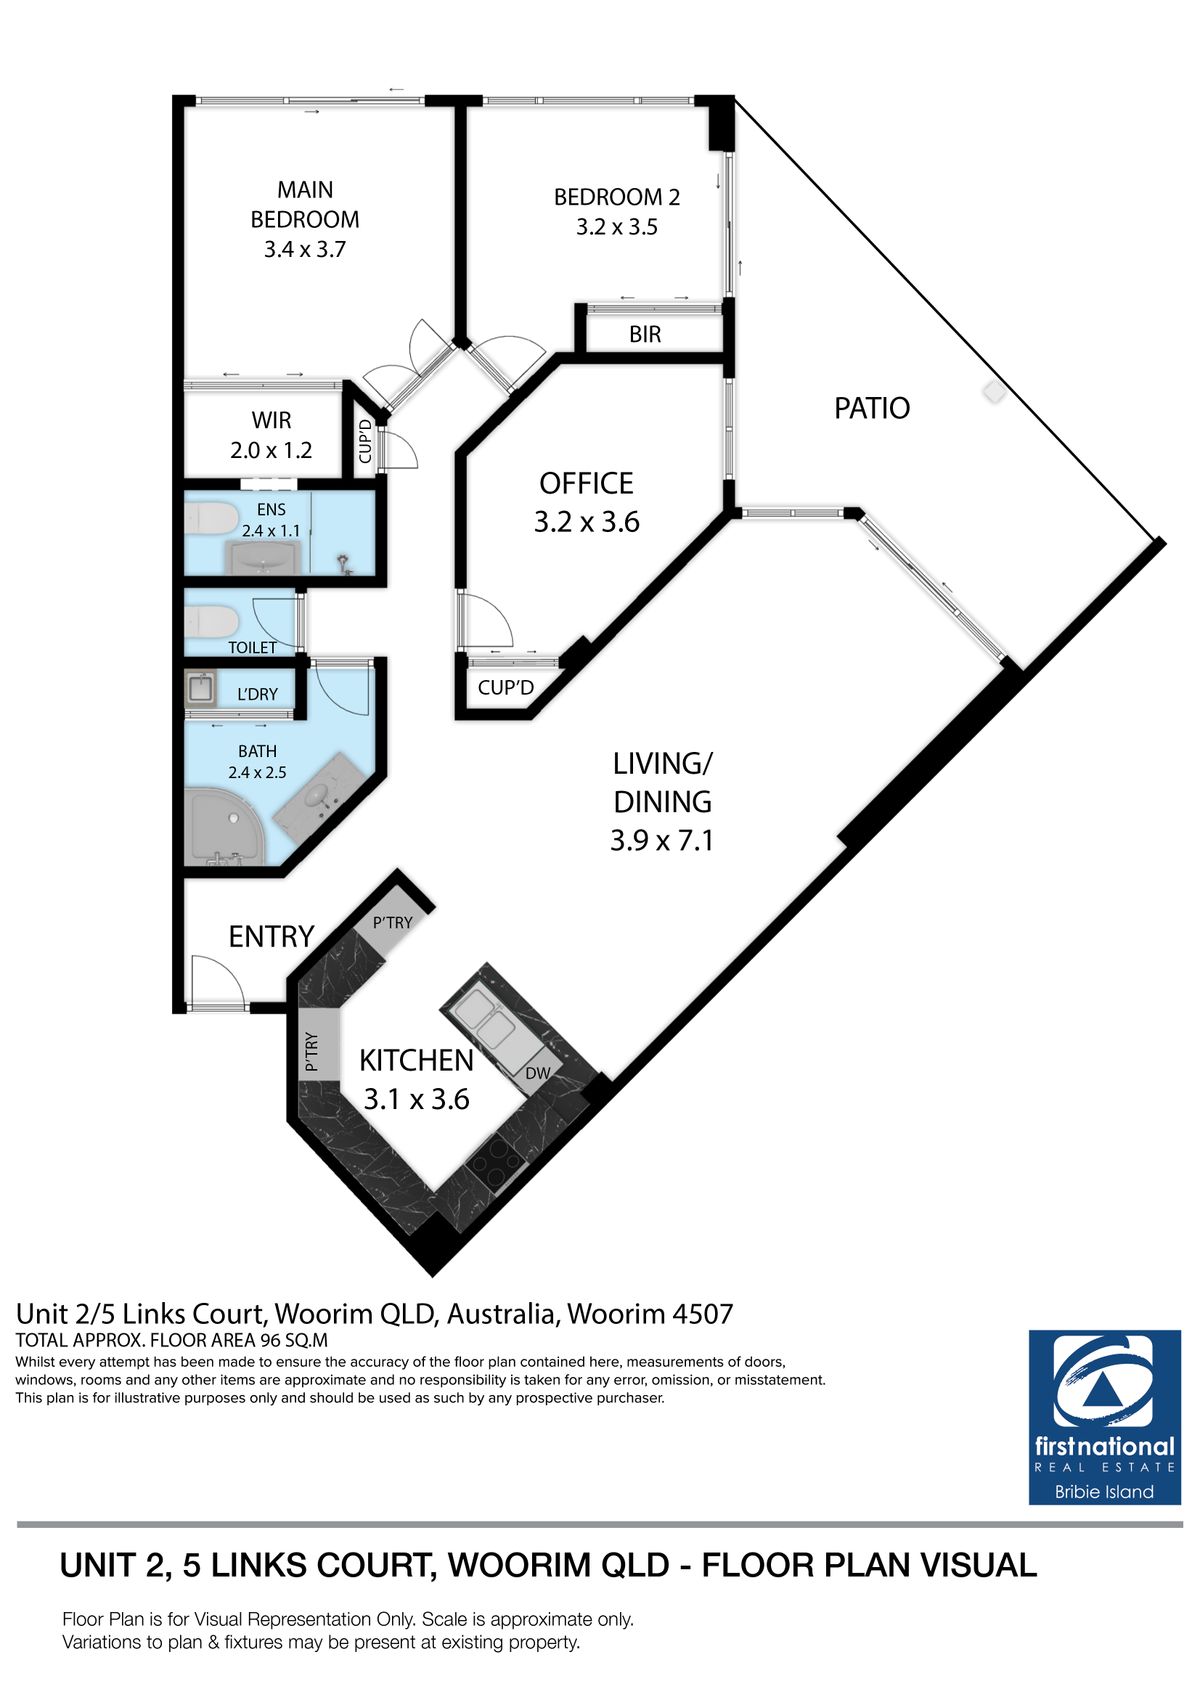 Unit 2 5 Links Crt Woorim 2D Floor Plan Visual